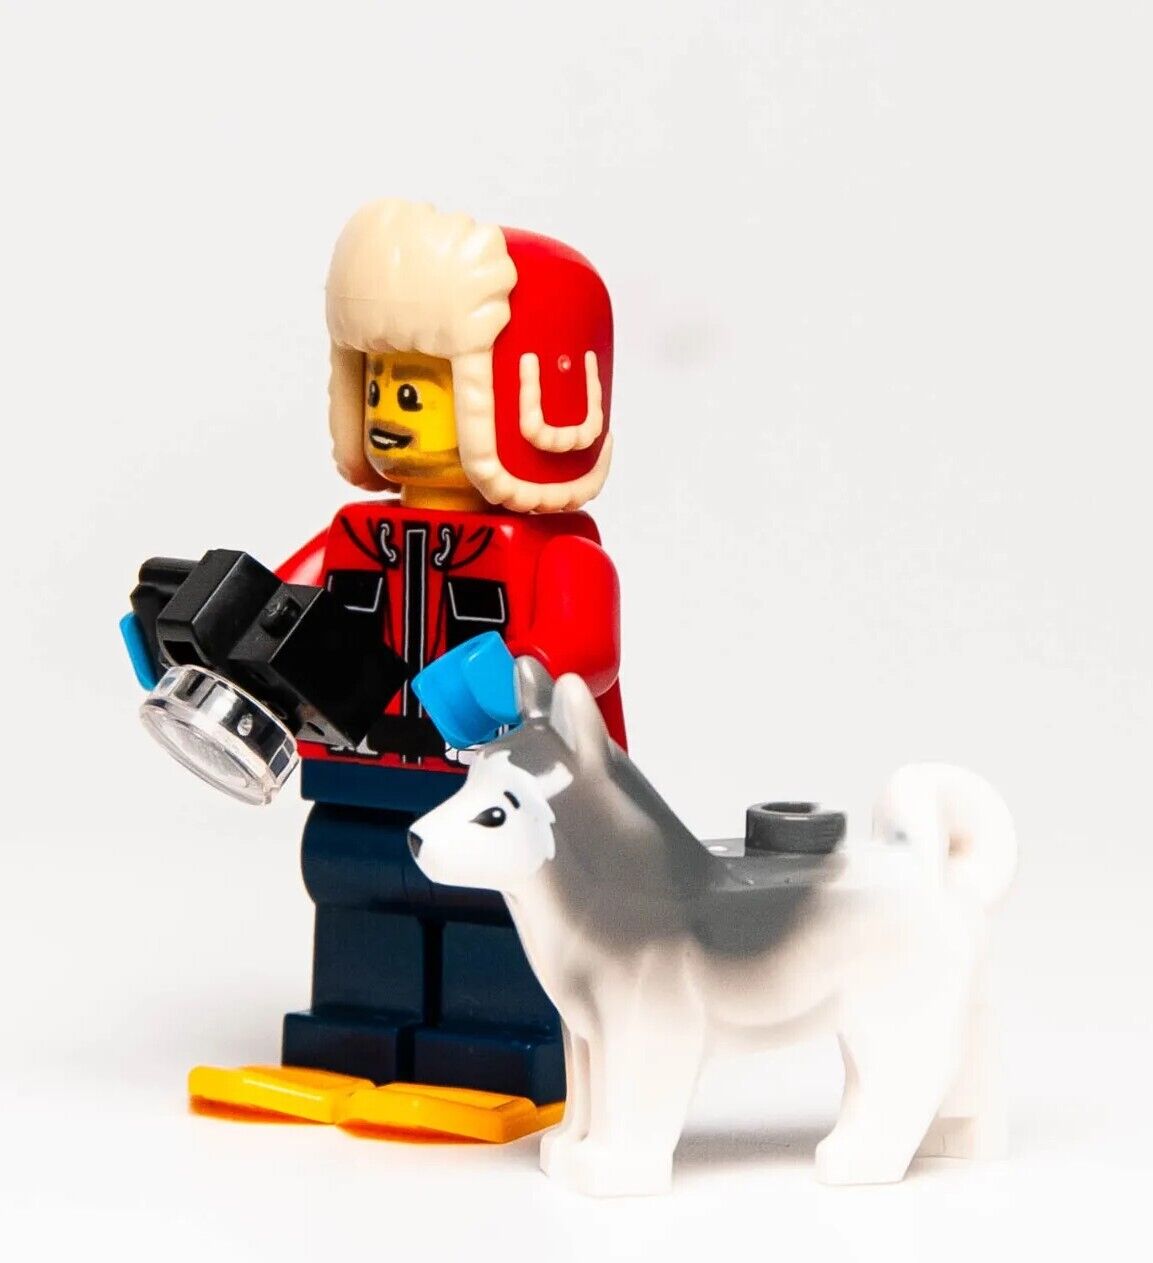 LEGO Minifigure Photographer Biologist & Husky Arctic (cty0905) 60194 60191 (brr